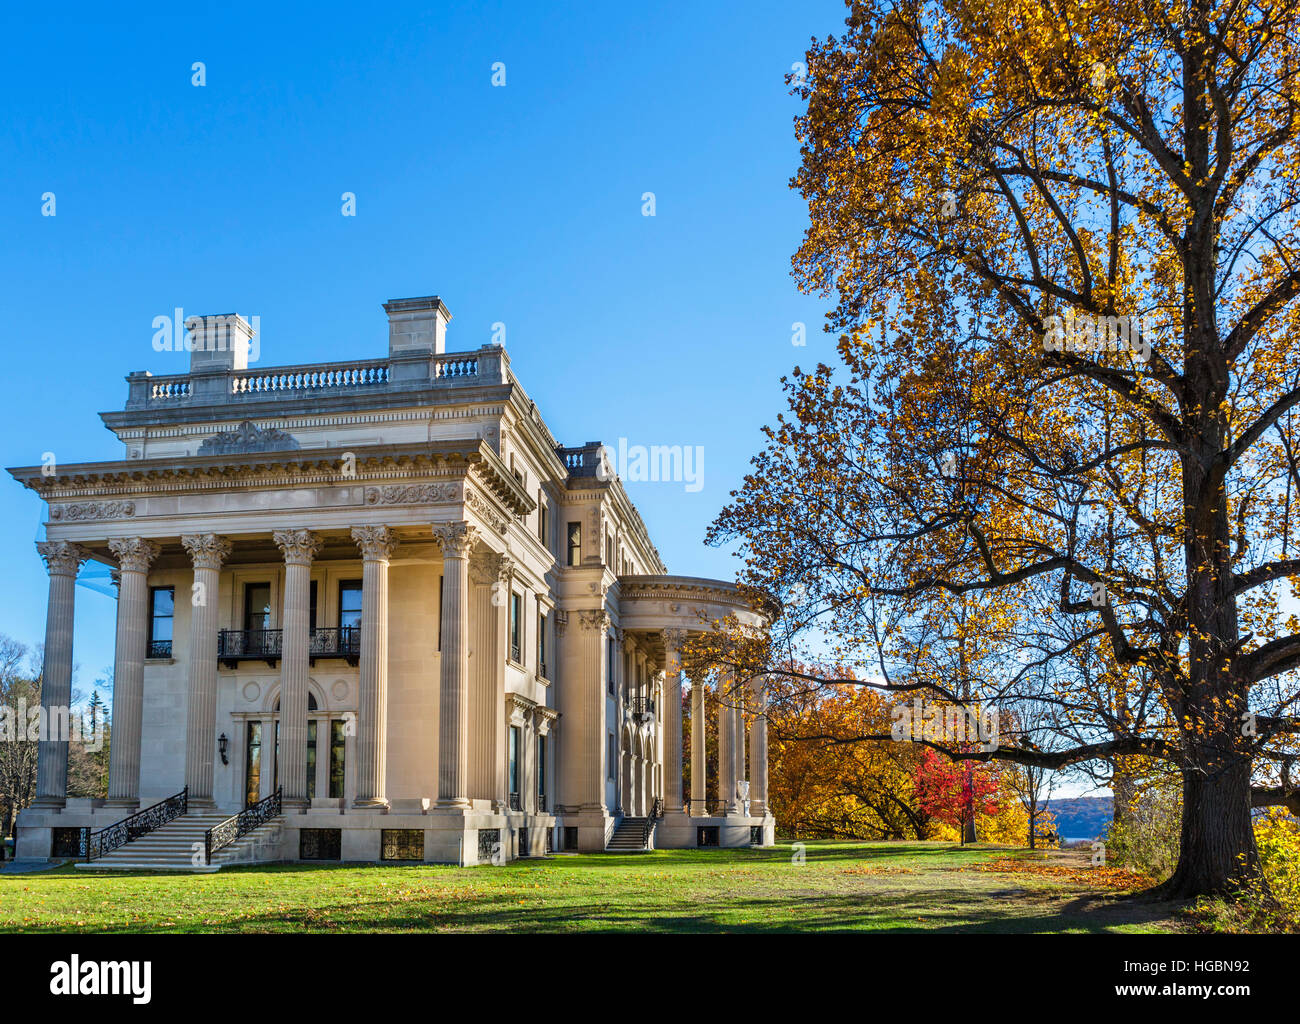 Site Historique National de Vanderbilt Mansion, Hyde Park, New York State, USA Banque D'Images